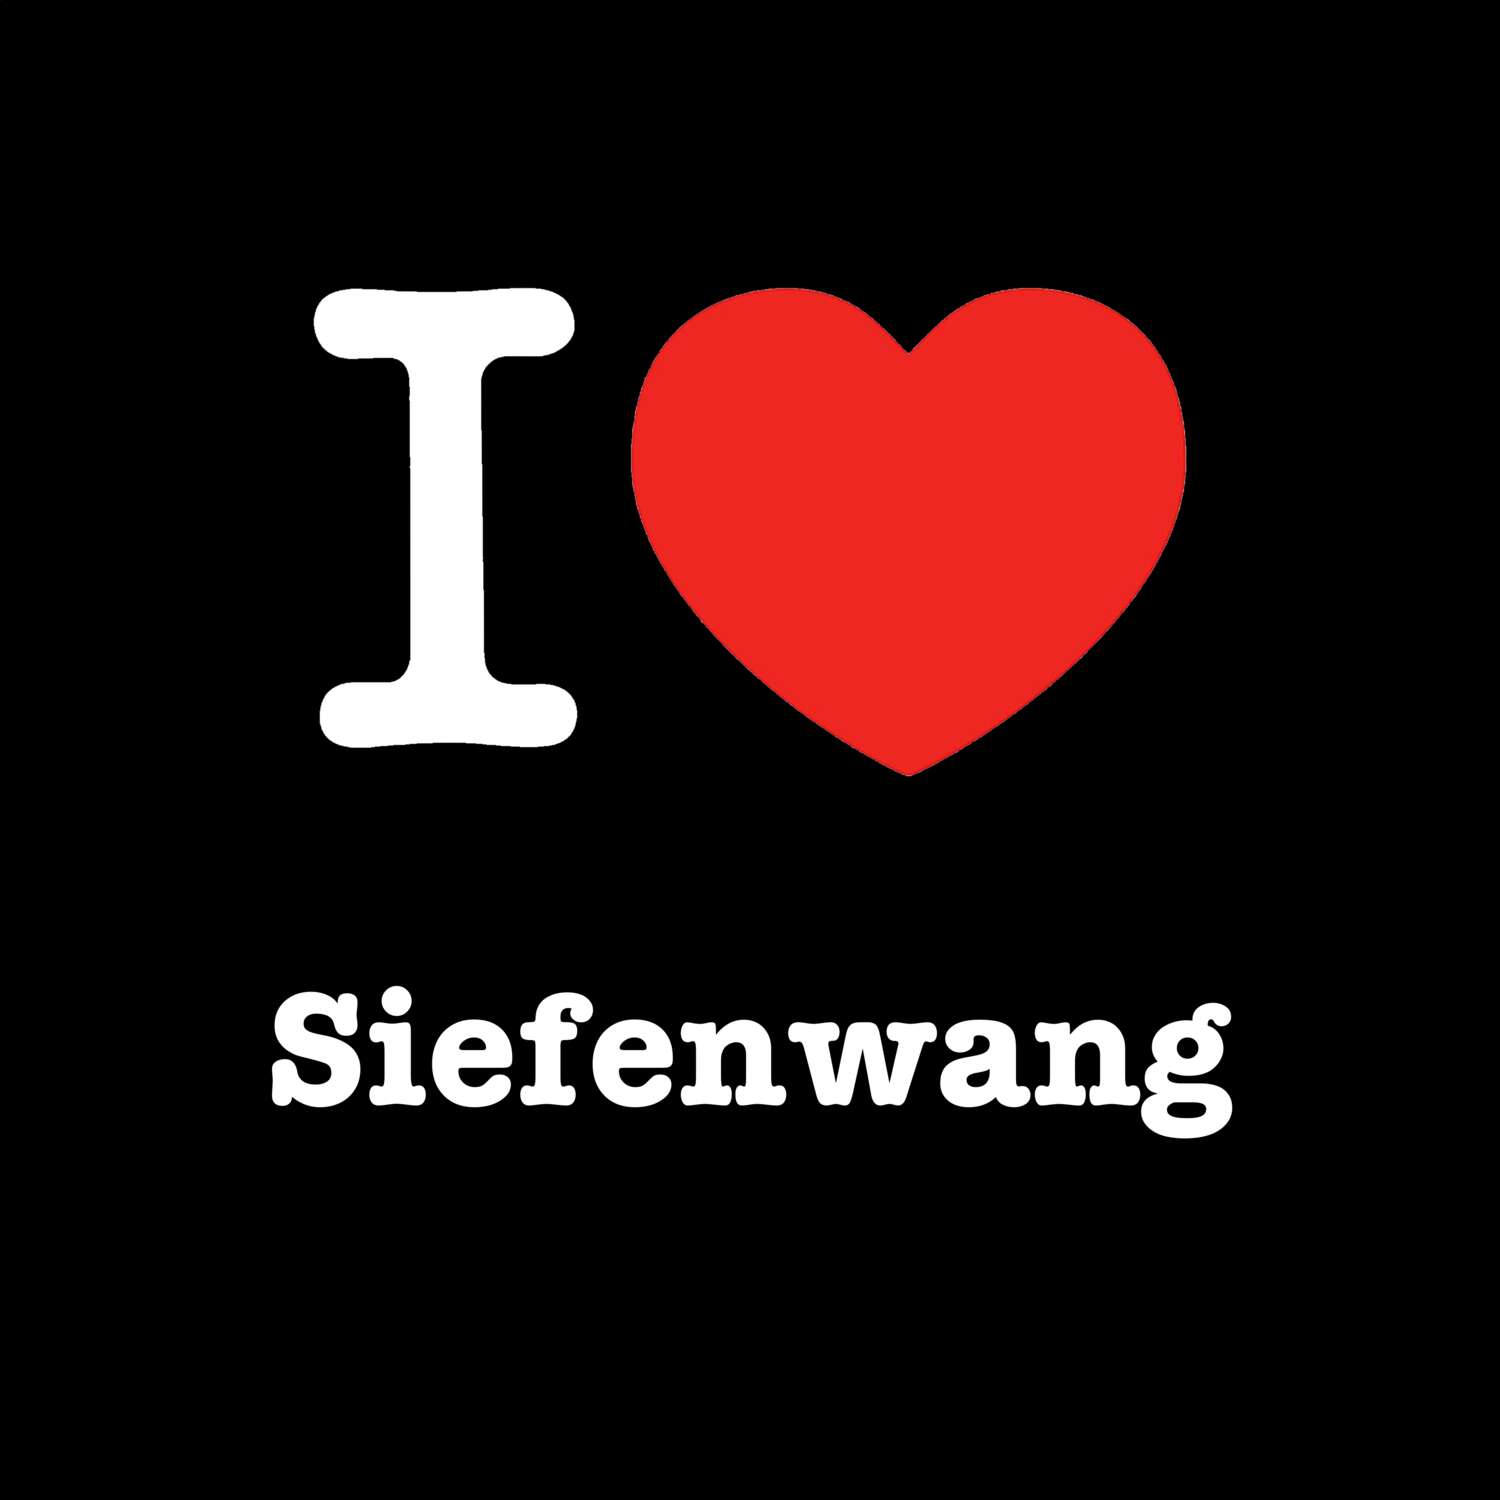 Siefenwang T-Shirt »I love«